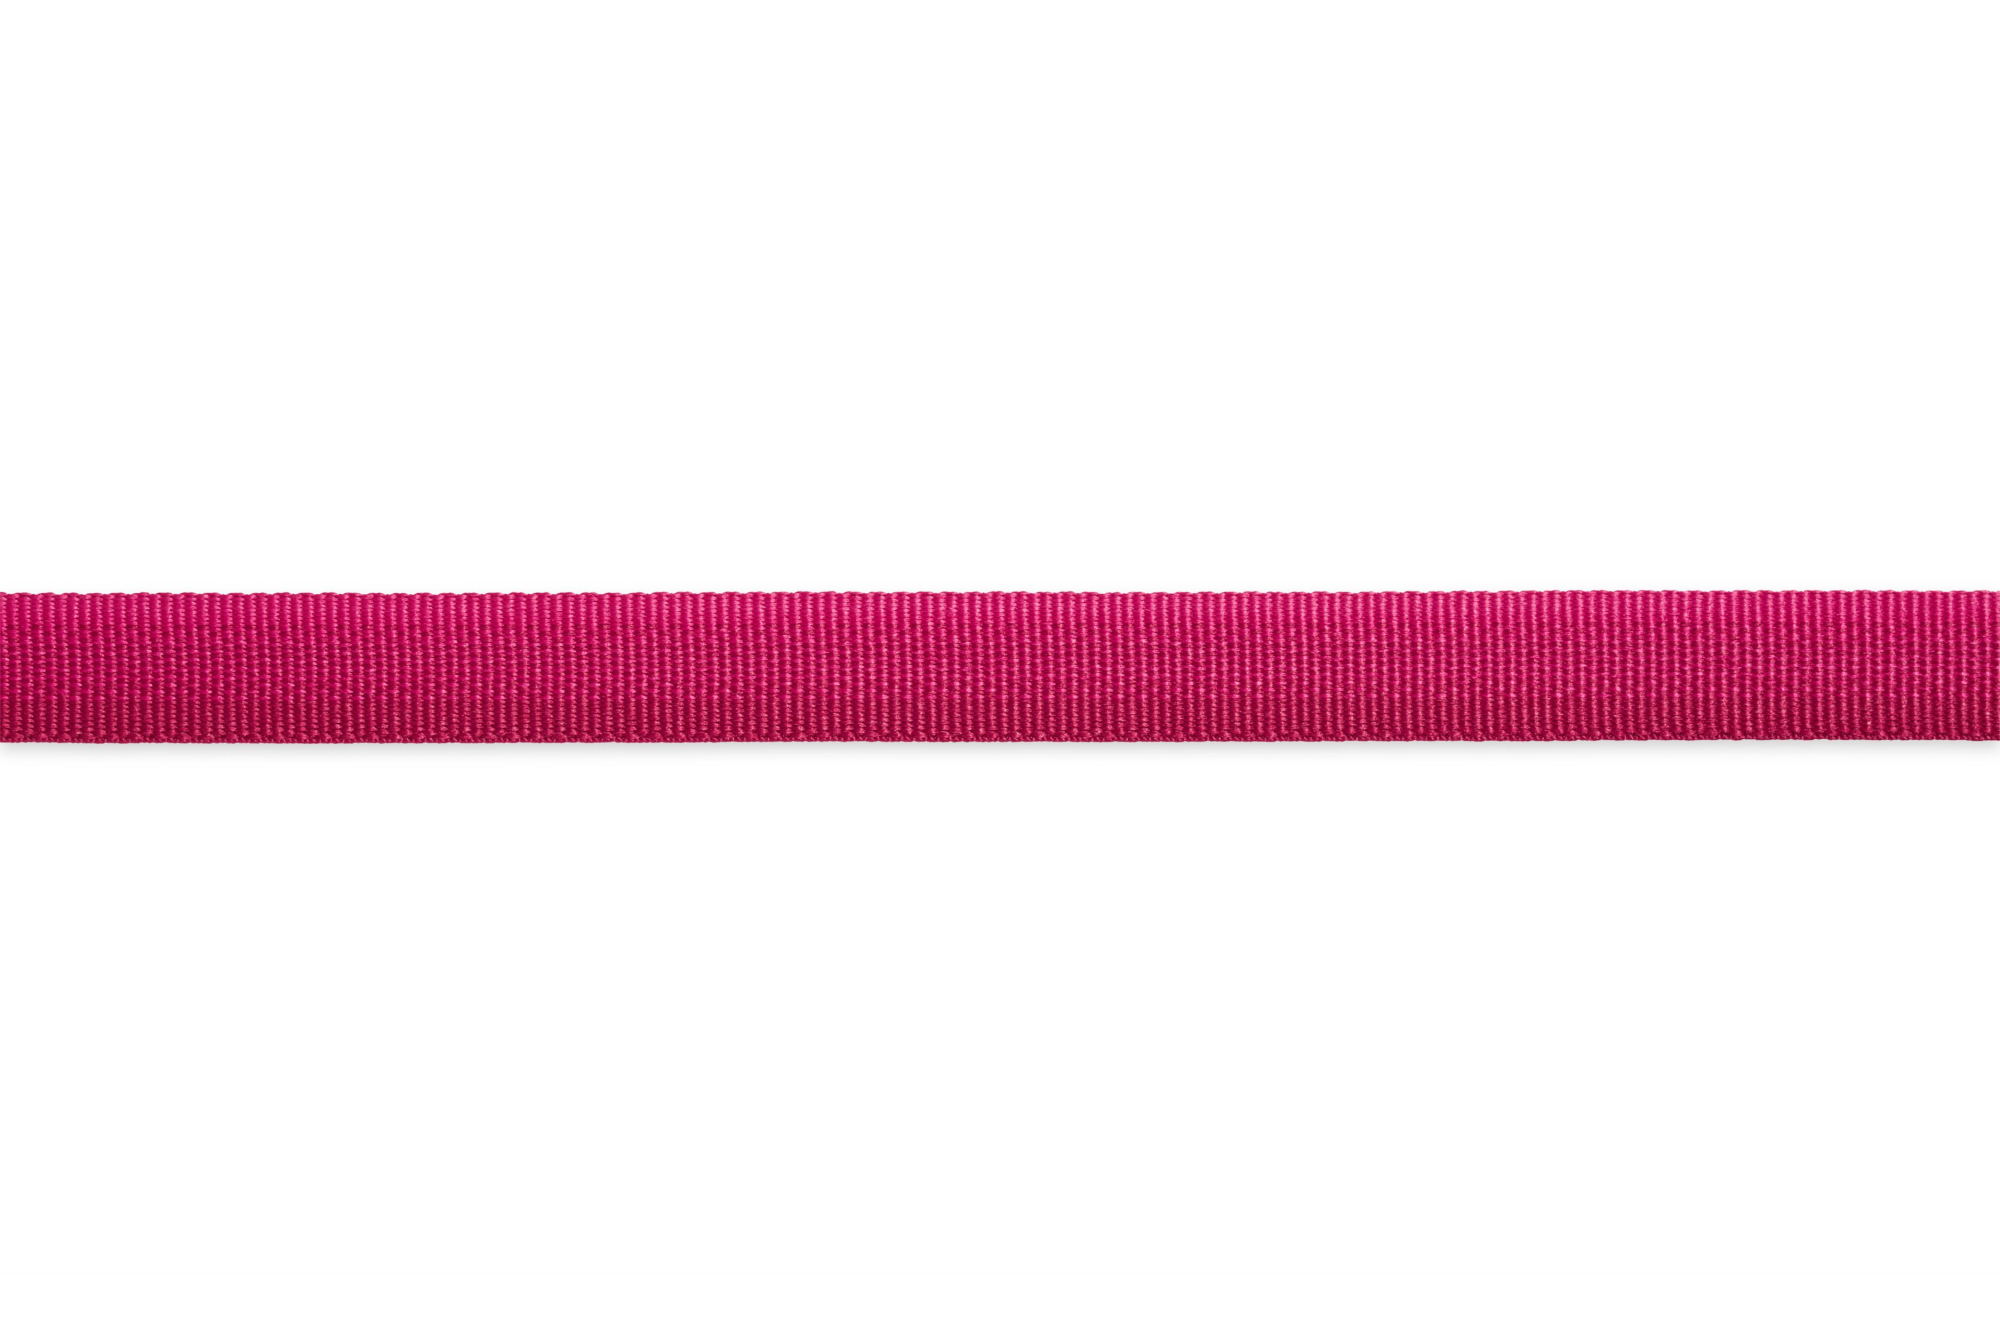 Trela Front Range de Ruffwear Hibiscus Pink